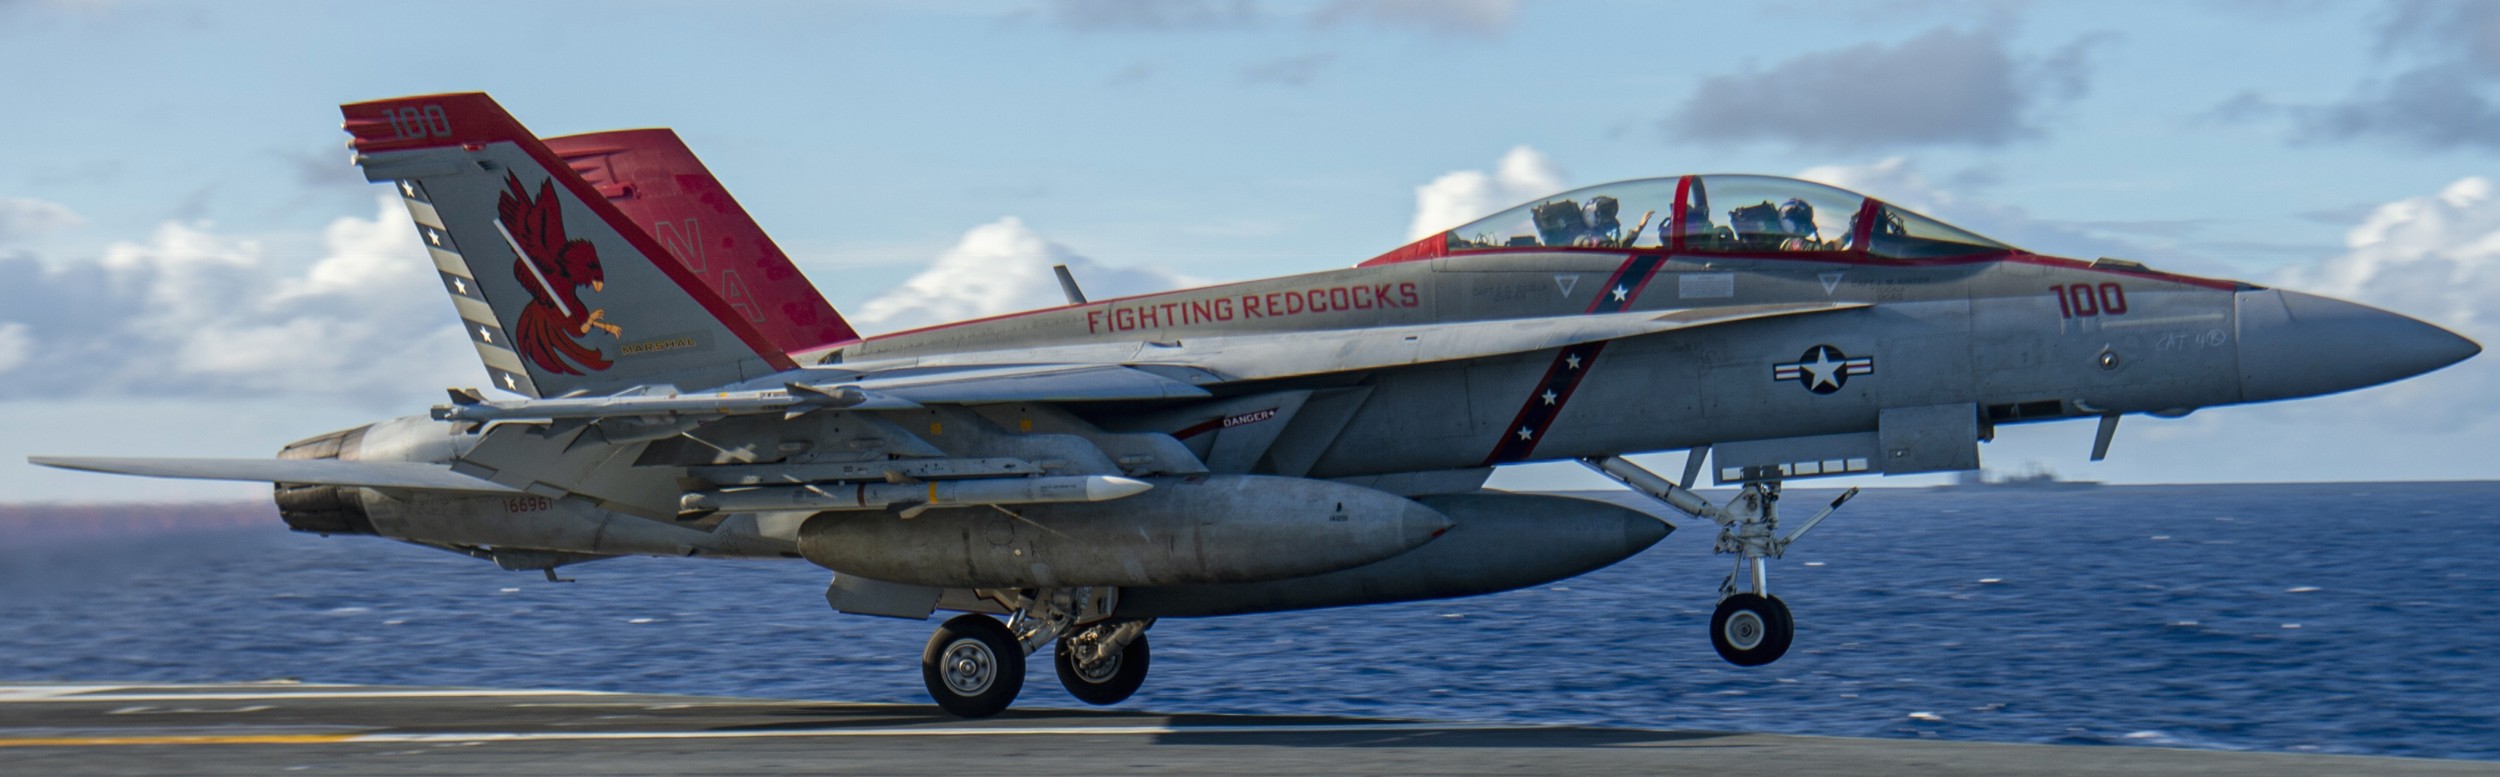 vfa-22 fighting redcocks strike fighter squadron f/a-18f super hornet cvn-68 uss nimitz cvw-17 us navy 115